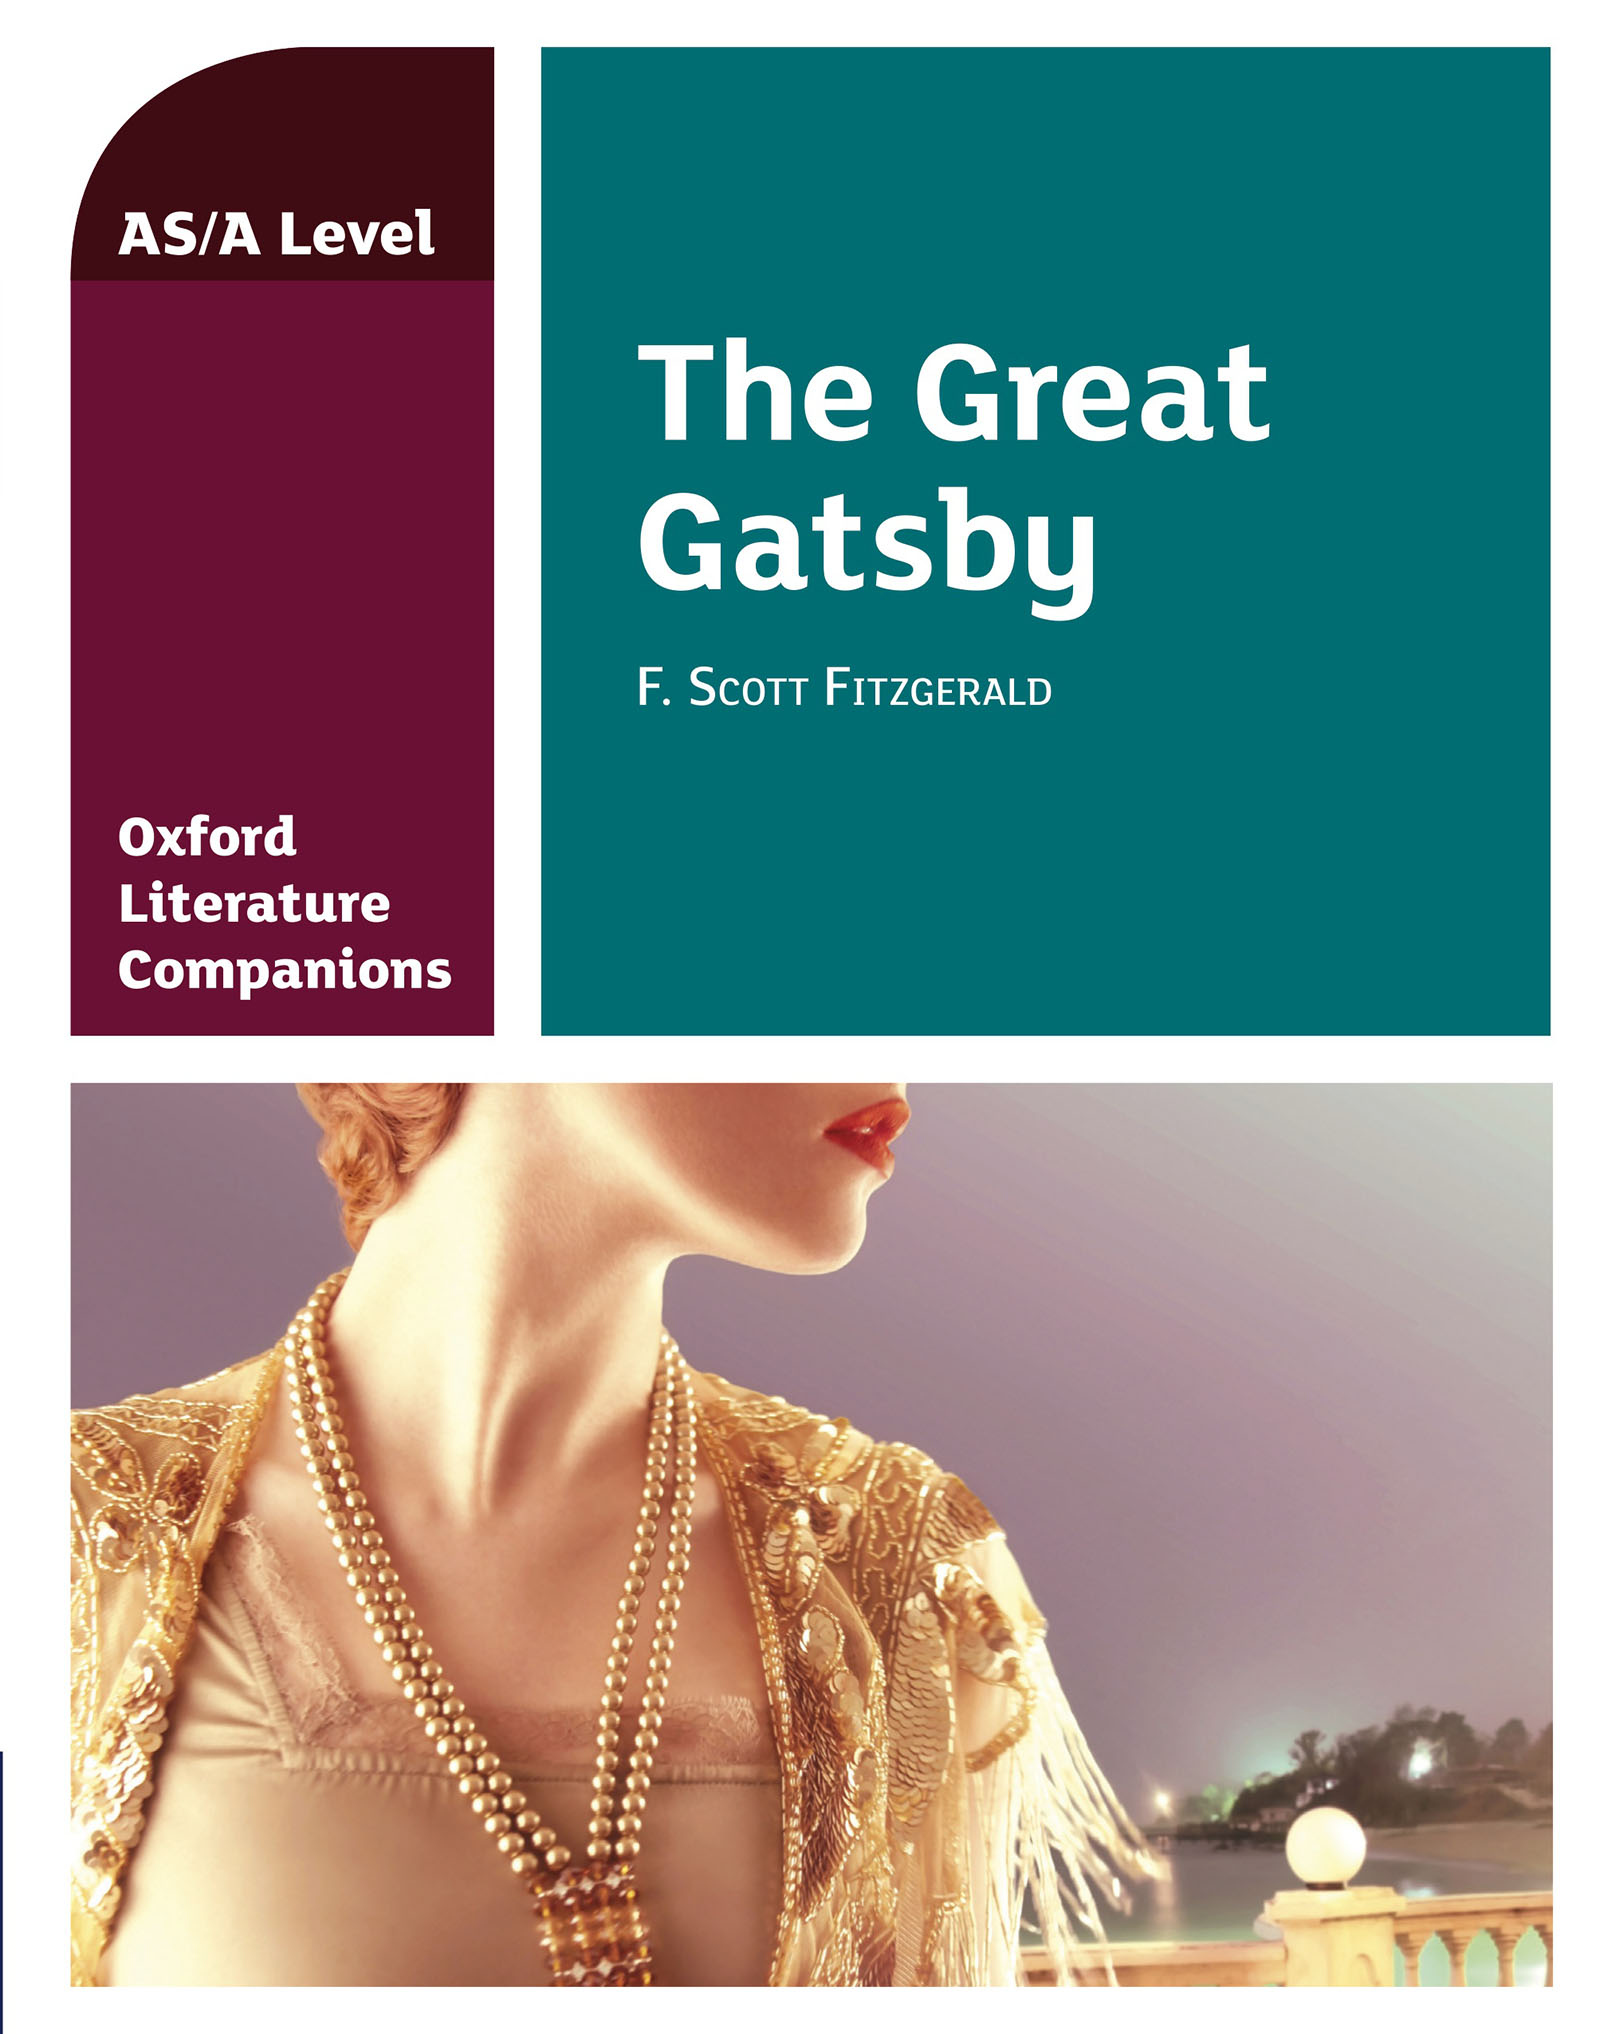 Oxford Literature Companions: The Great Gatsby